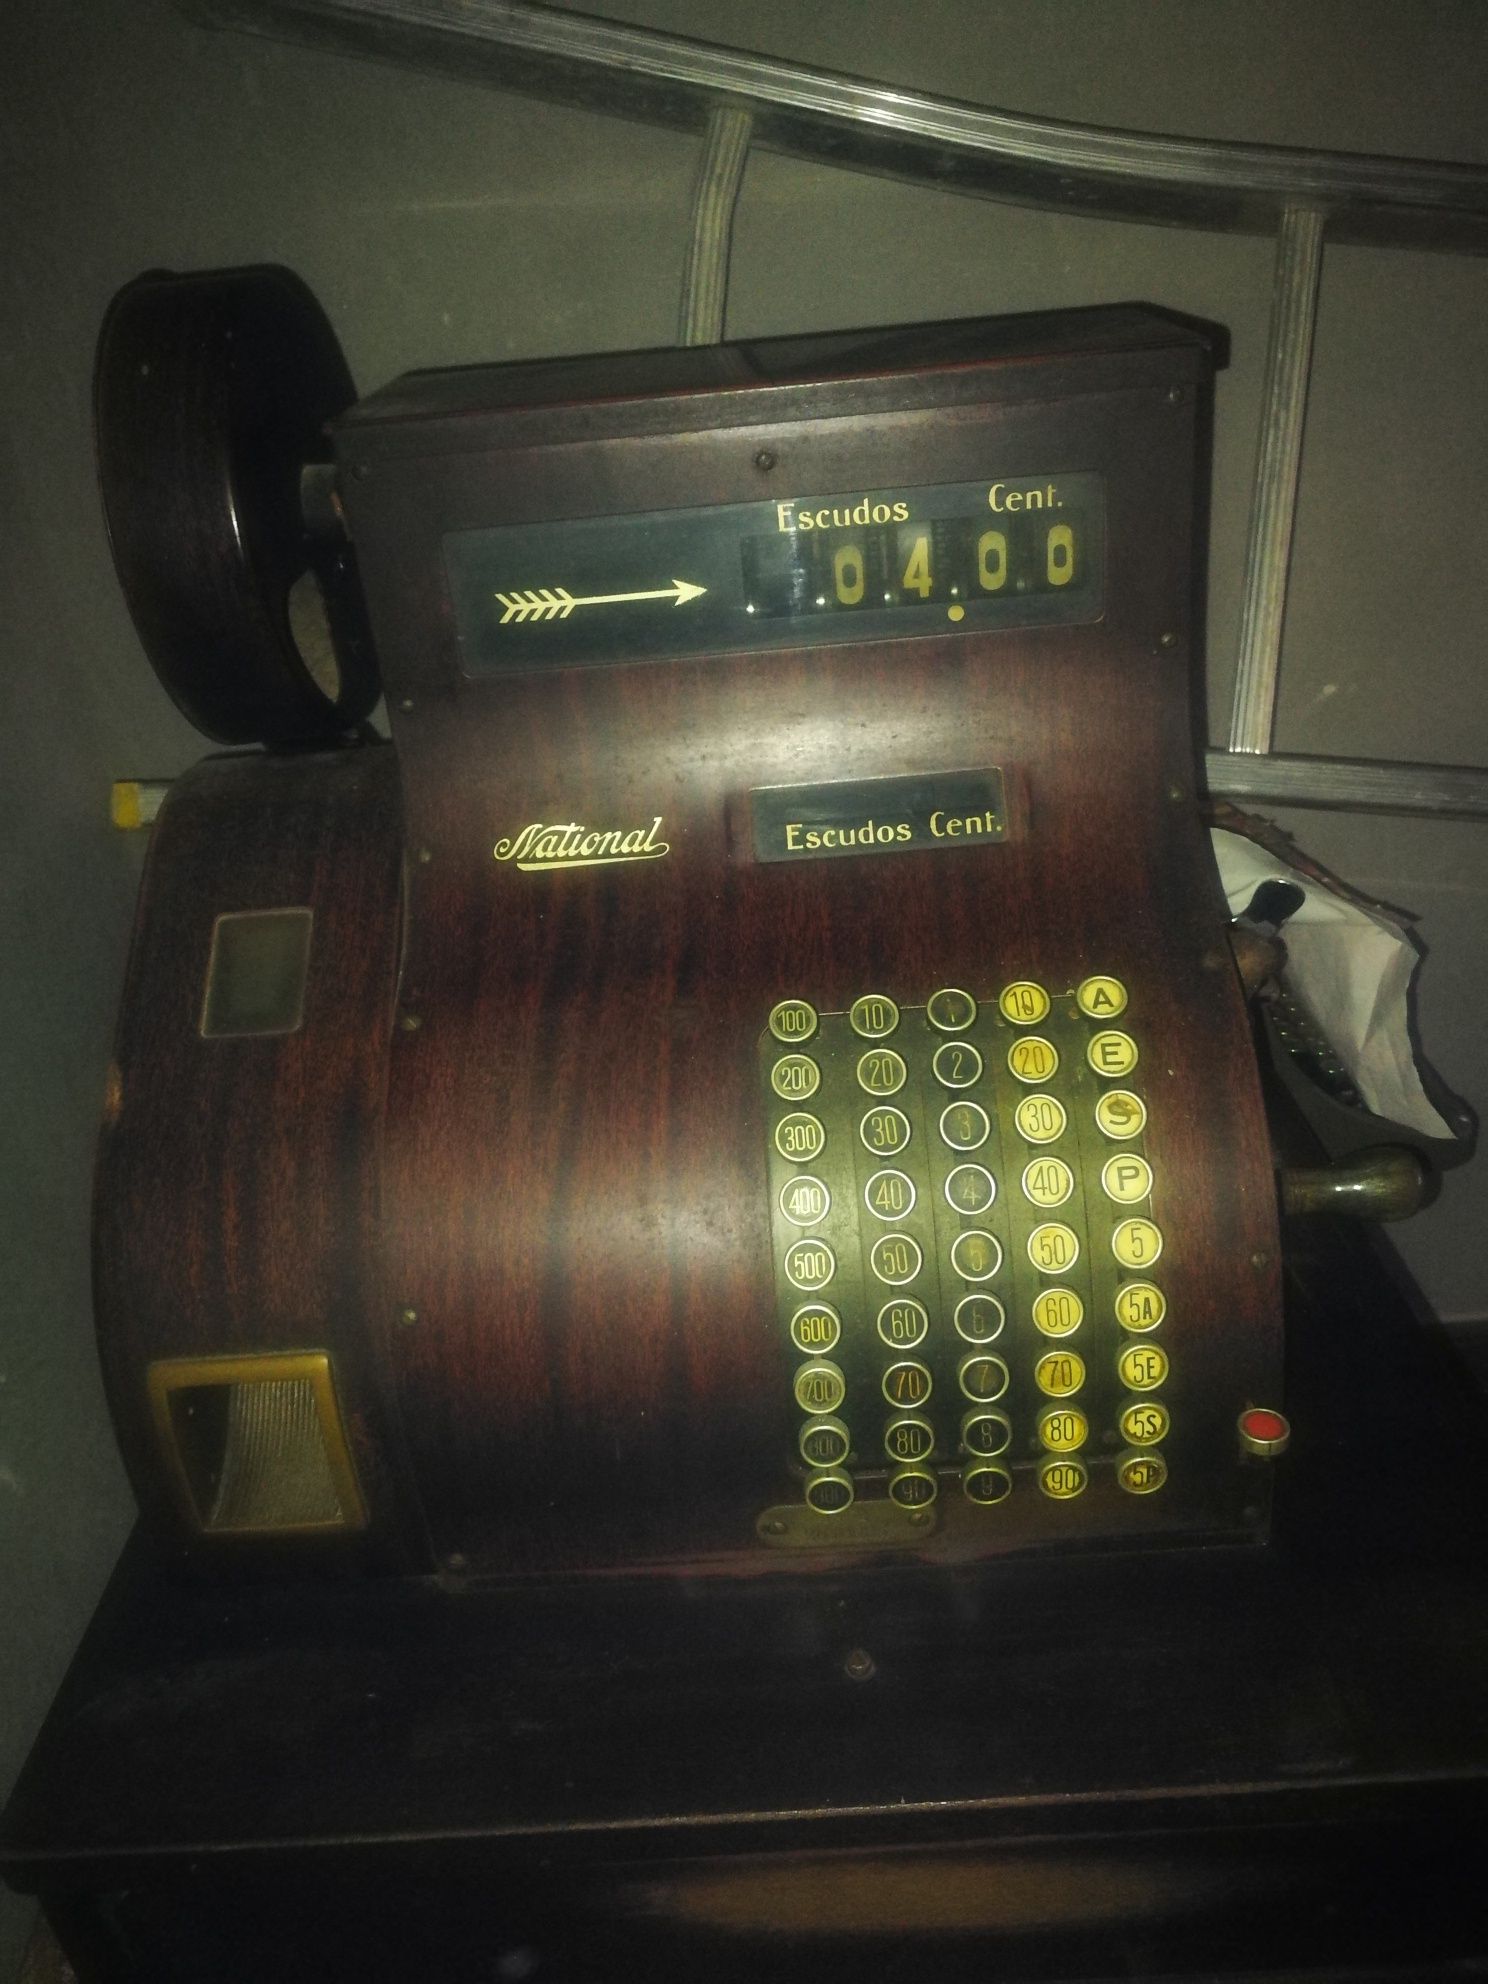 Vendo máquina registadora antiga